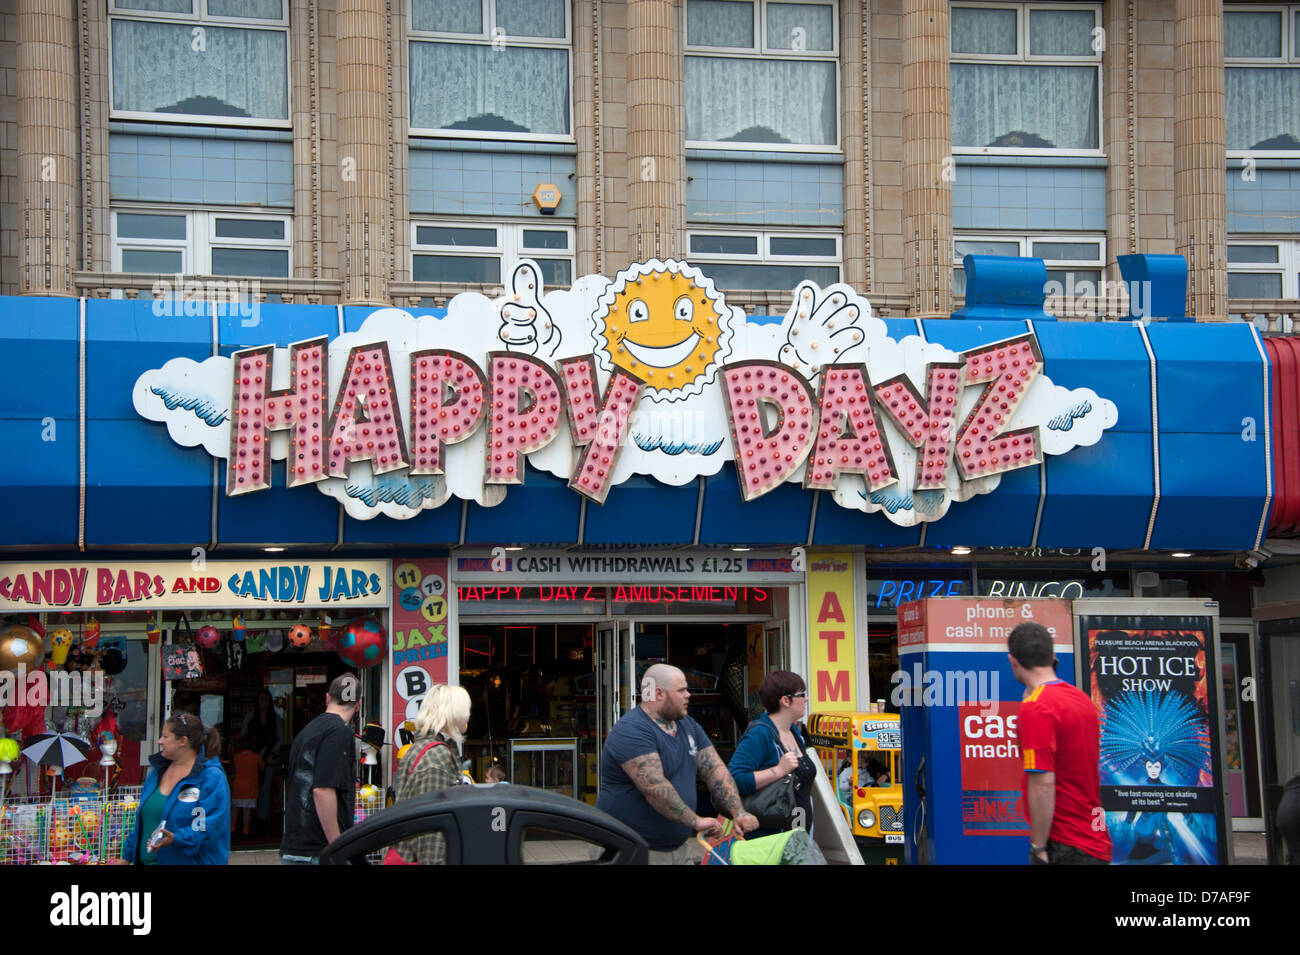 Happy Days Dayz Arcade Blackpool UK Stock Photo